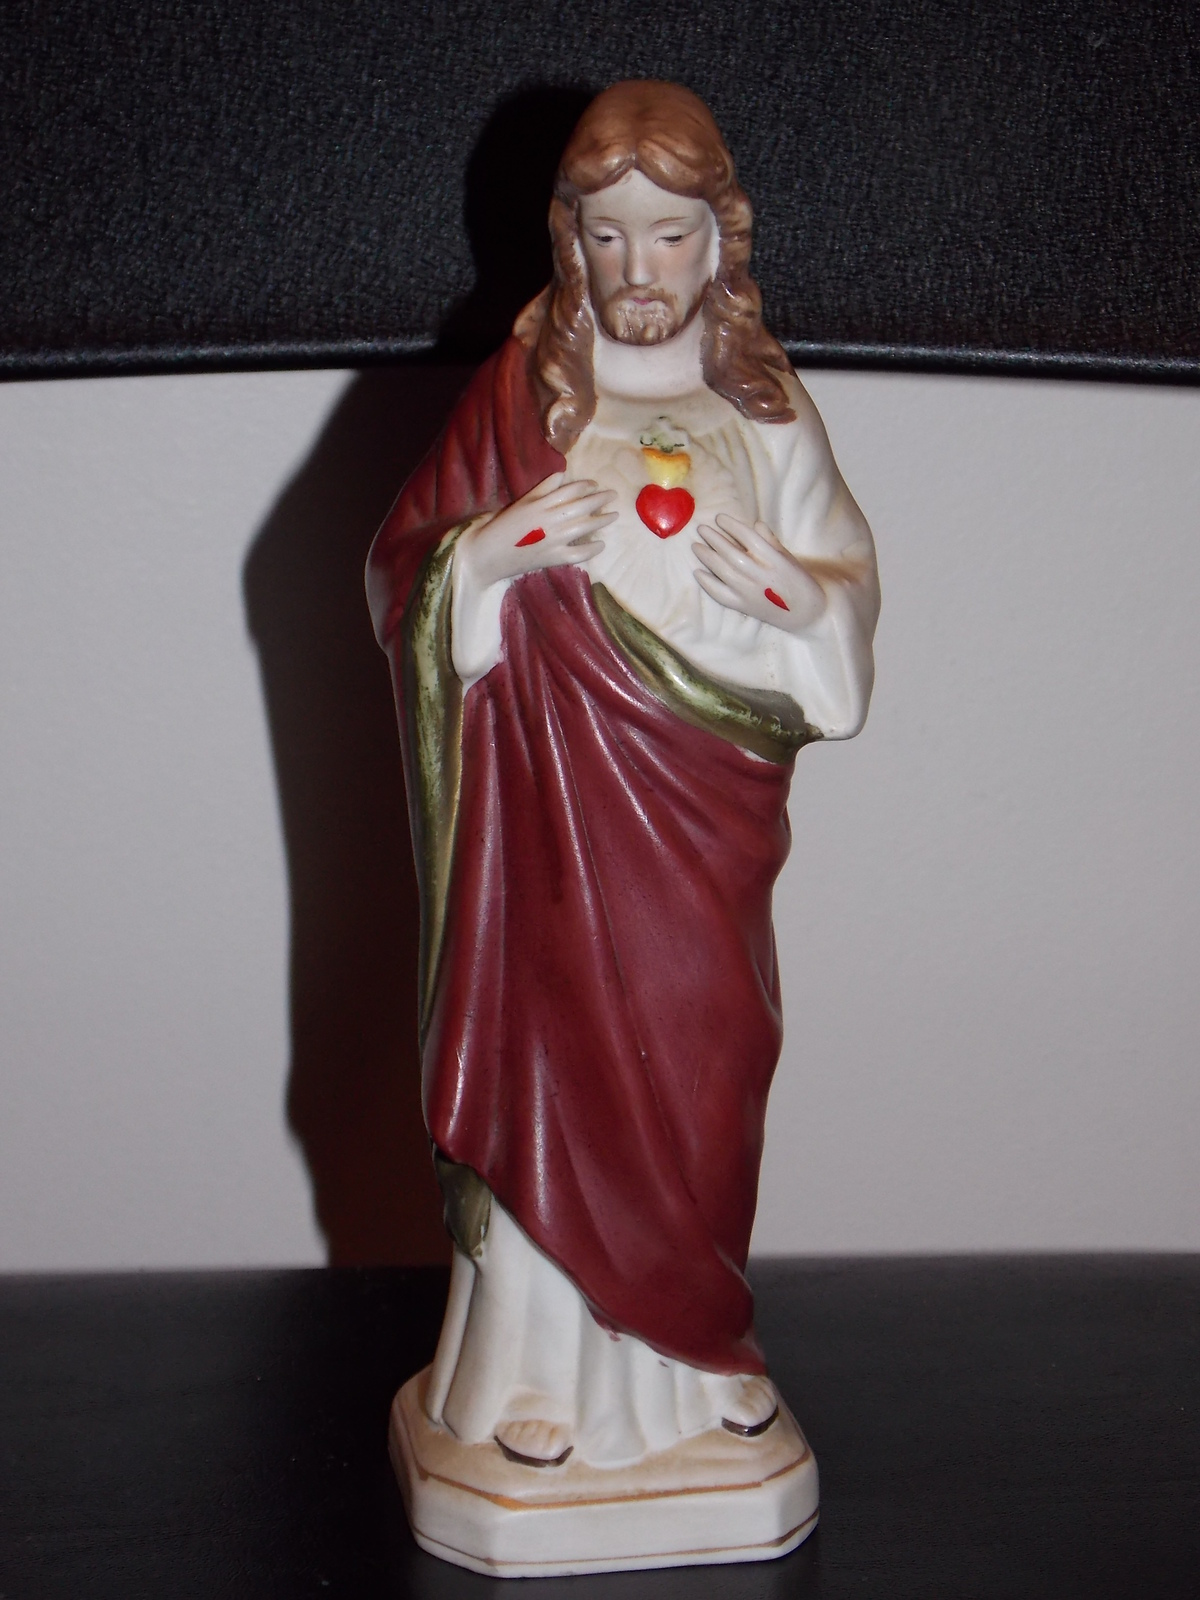 Primary image for Vintage Lefton Jesus Figurine 8 "